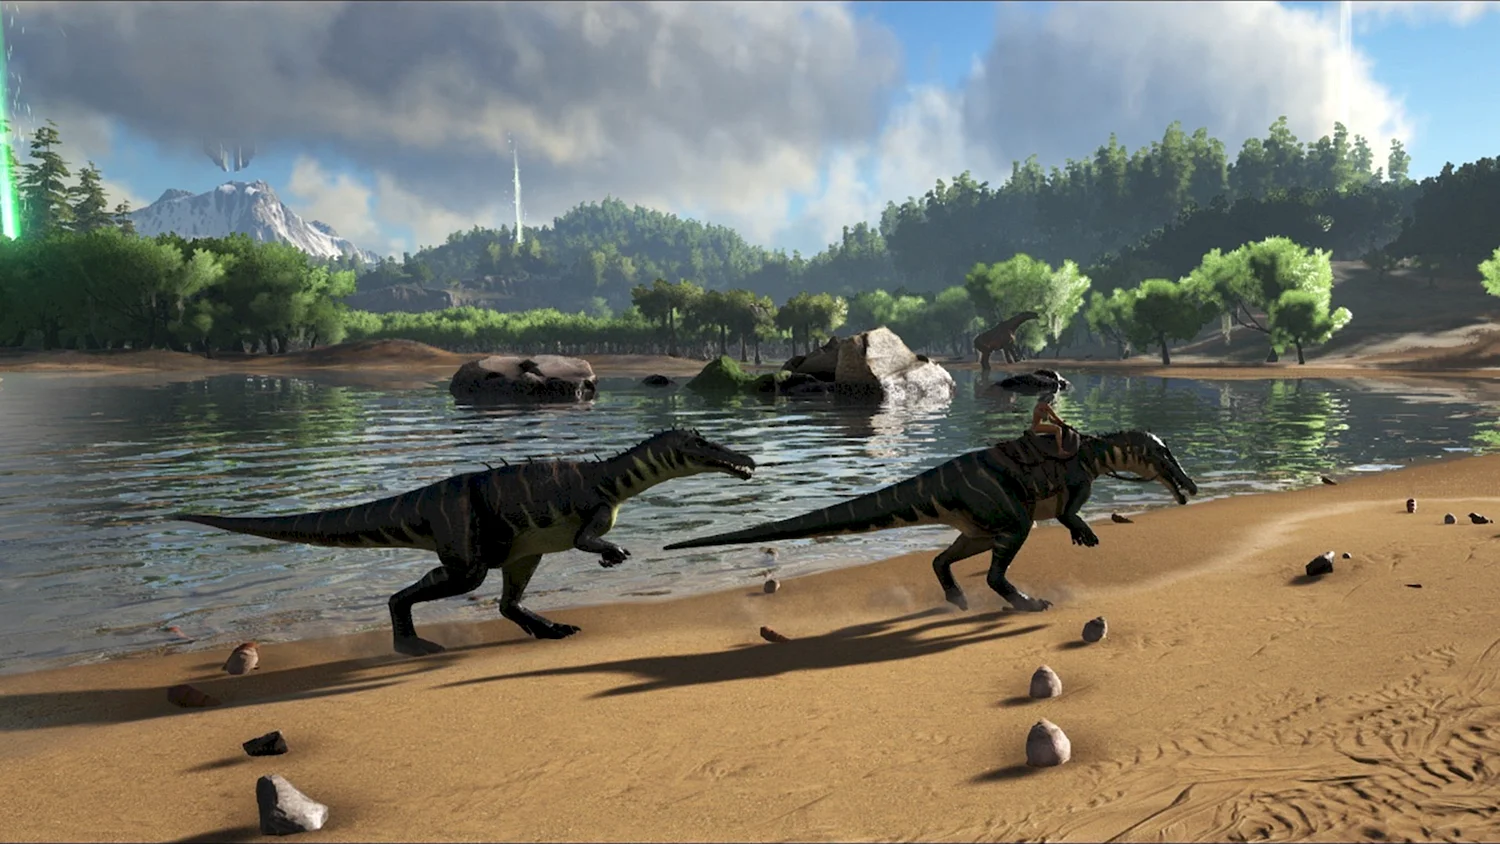 АРК сурвайвал ЭВОЛВ динозавры